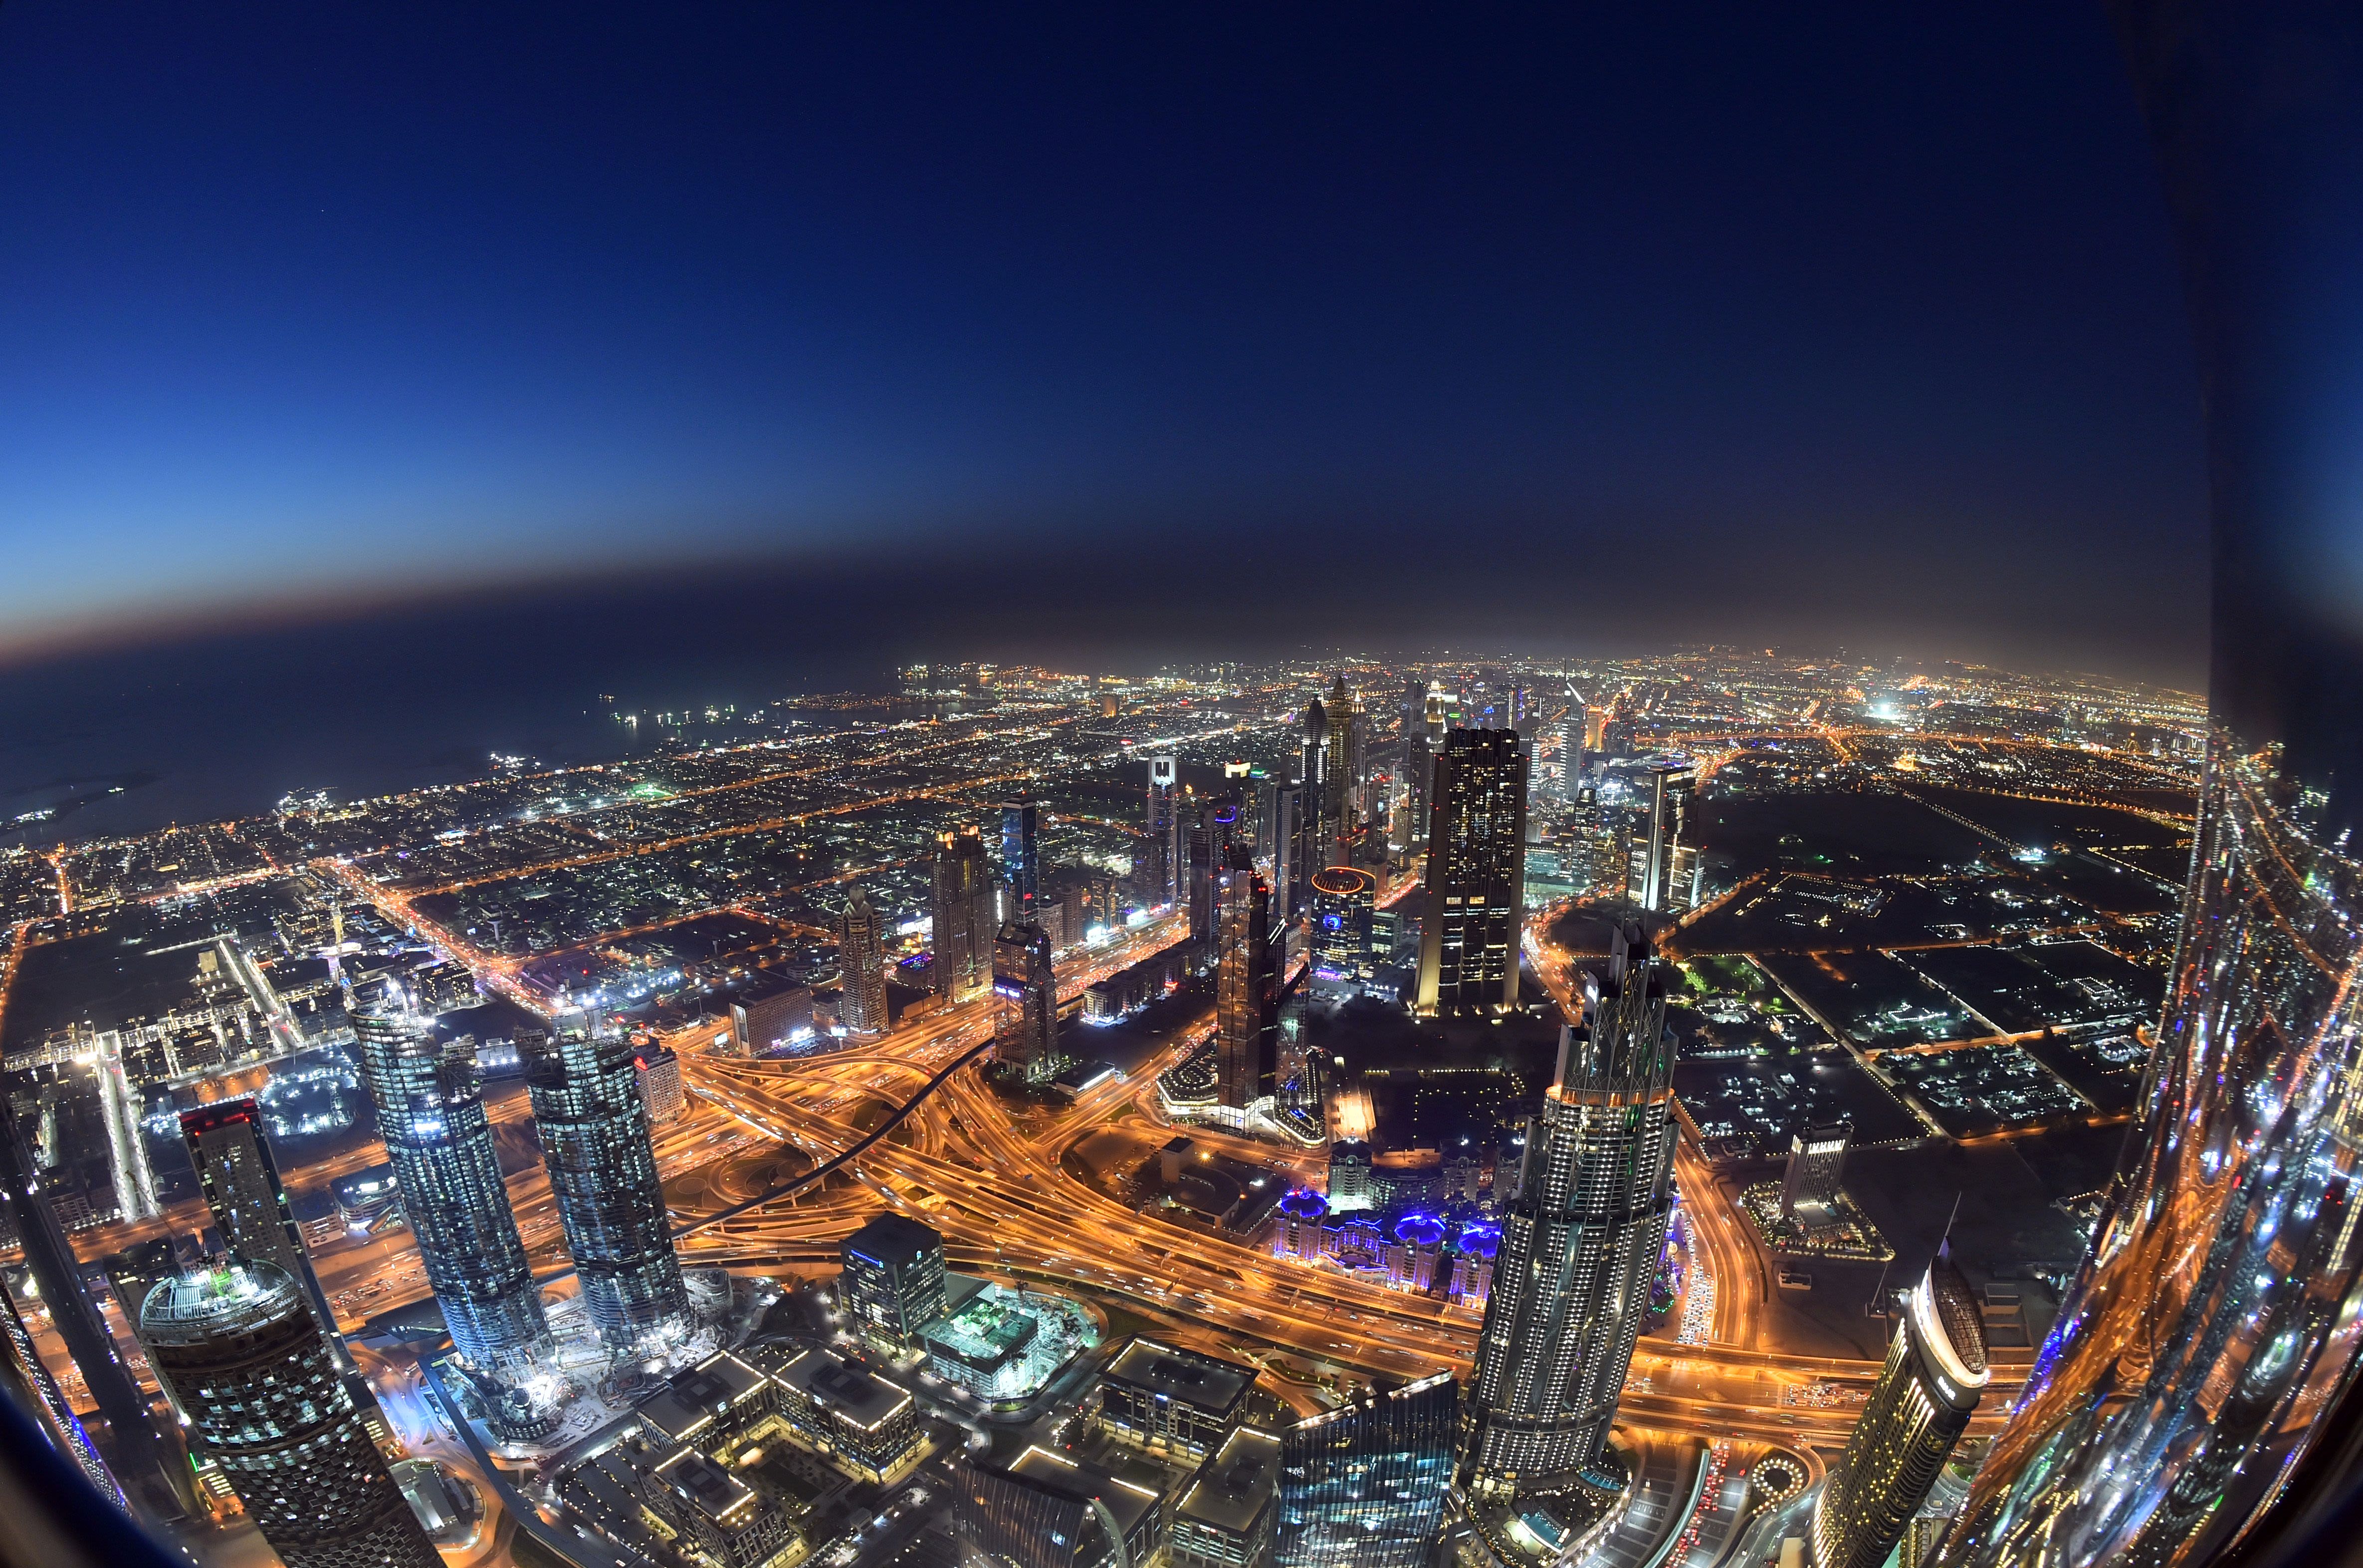 Dubai S Burj Khalifa A Look Inside The